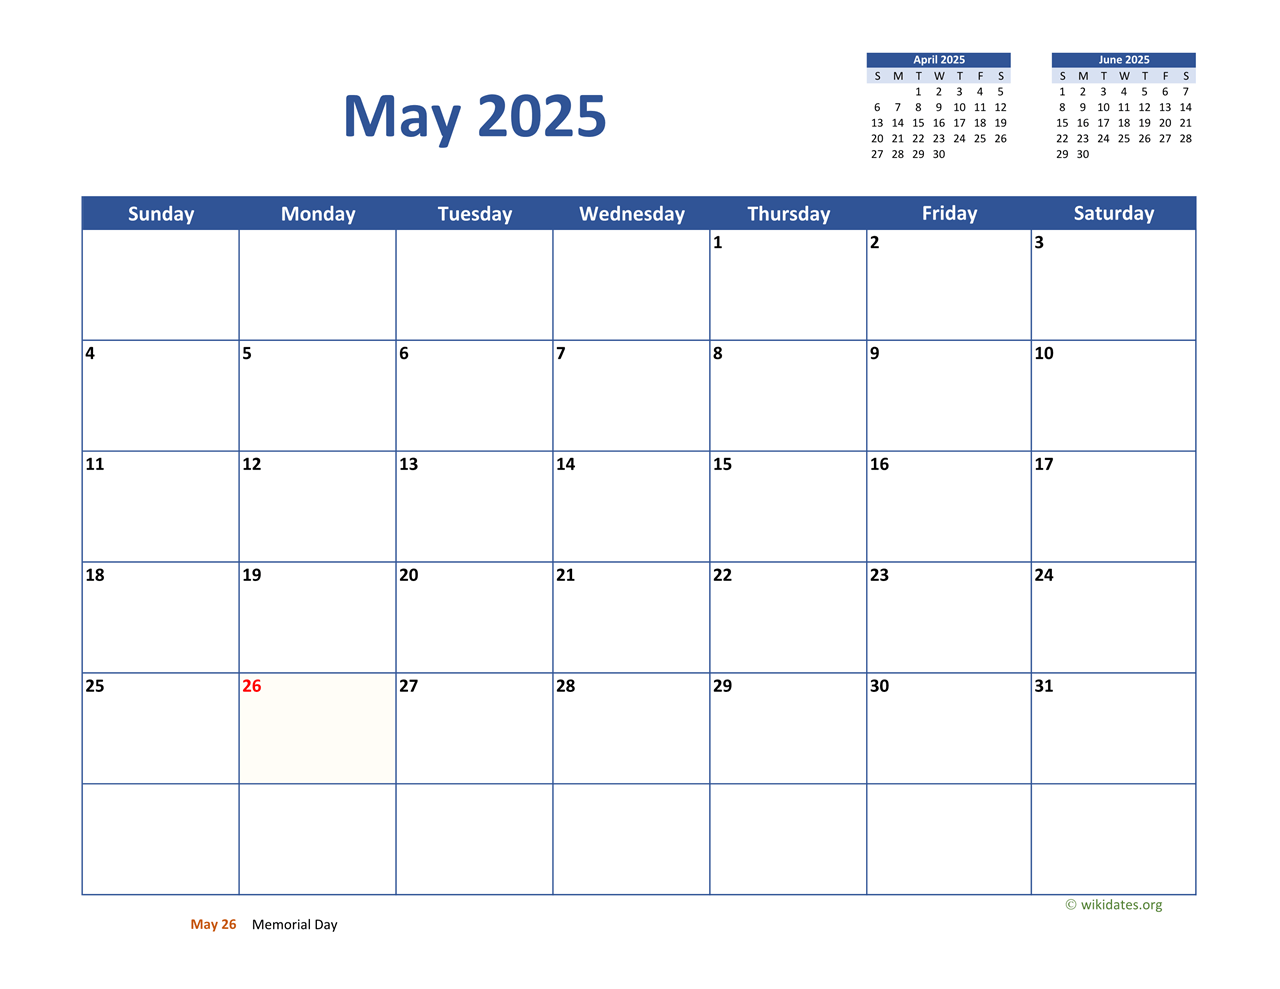 May 2025 Calendar Classic WikiDates